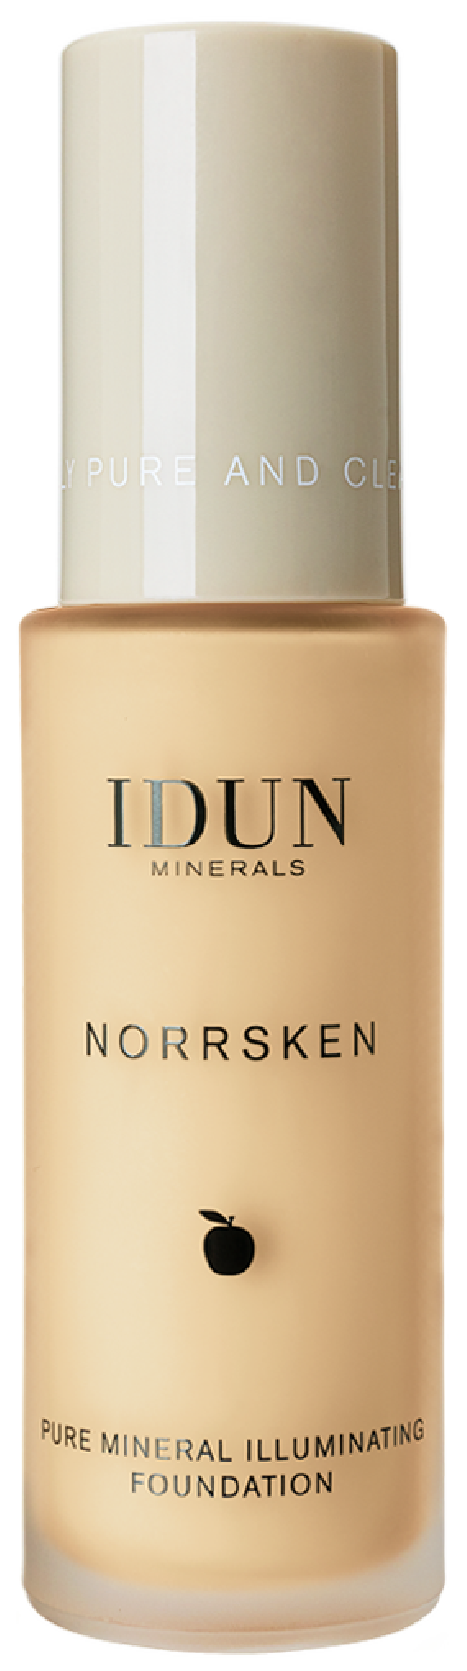 IDUN Minerals Norrsken Pure Mineral Illuminating Foundation, Svea, Medium, 30 ml